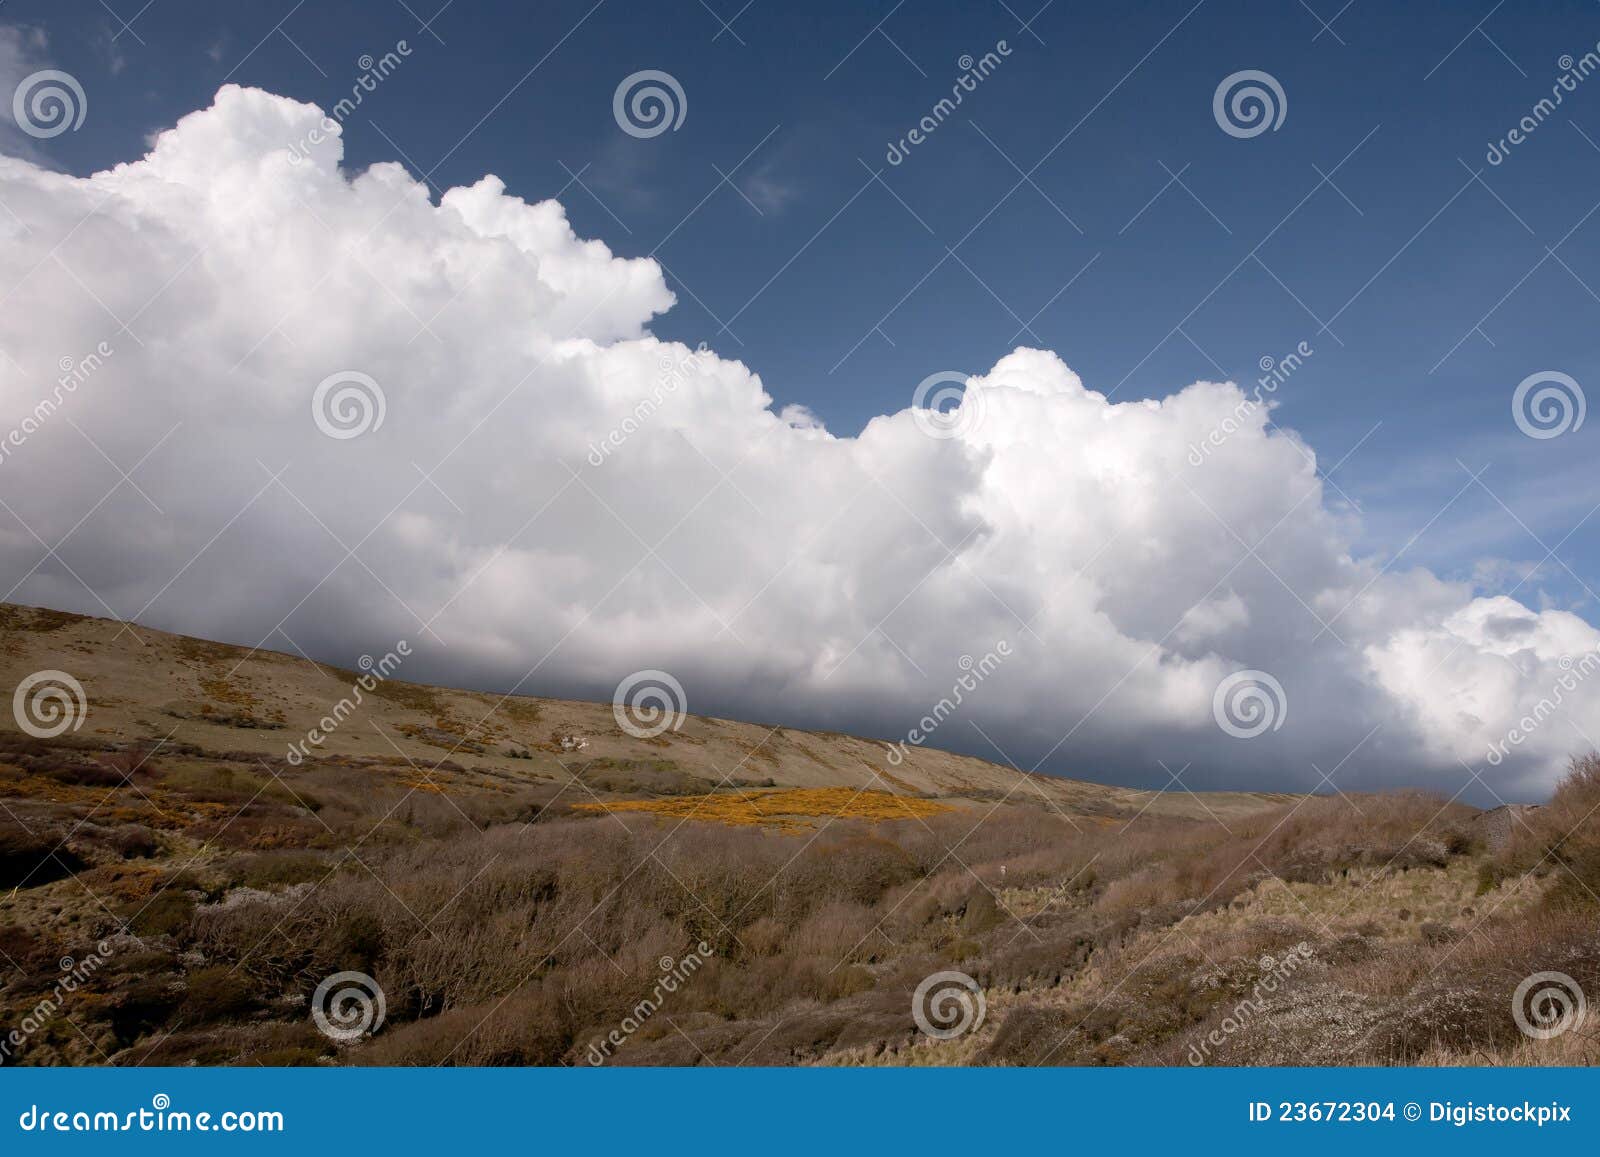 cumulo nimbus clouds, dorset coast, england